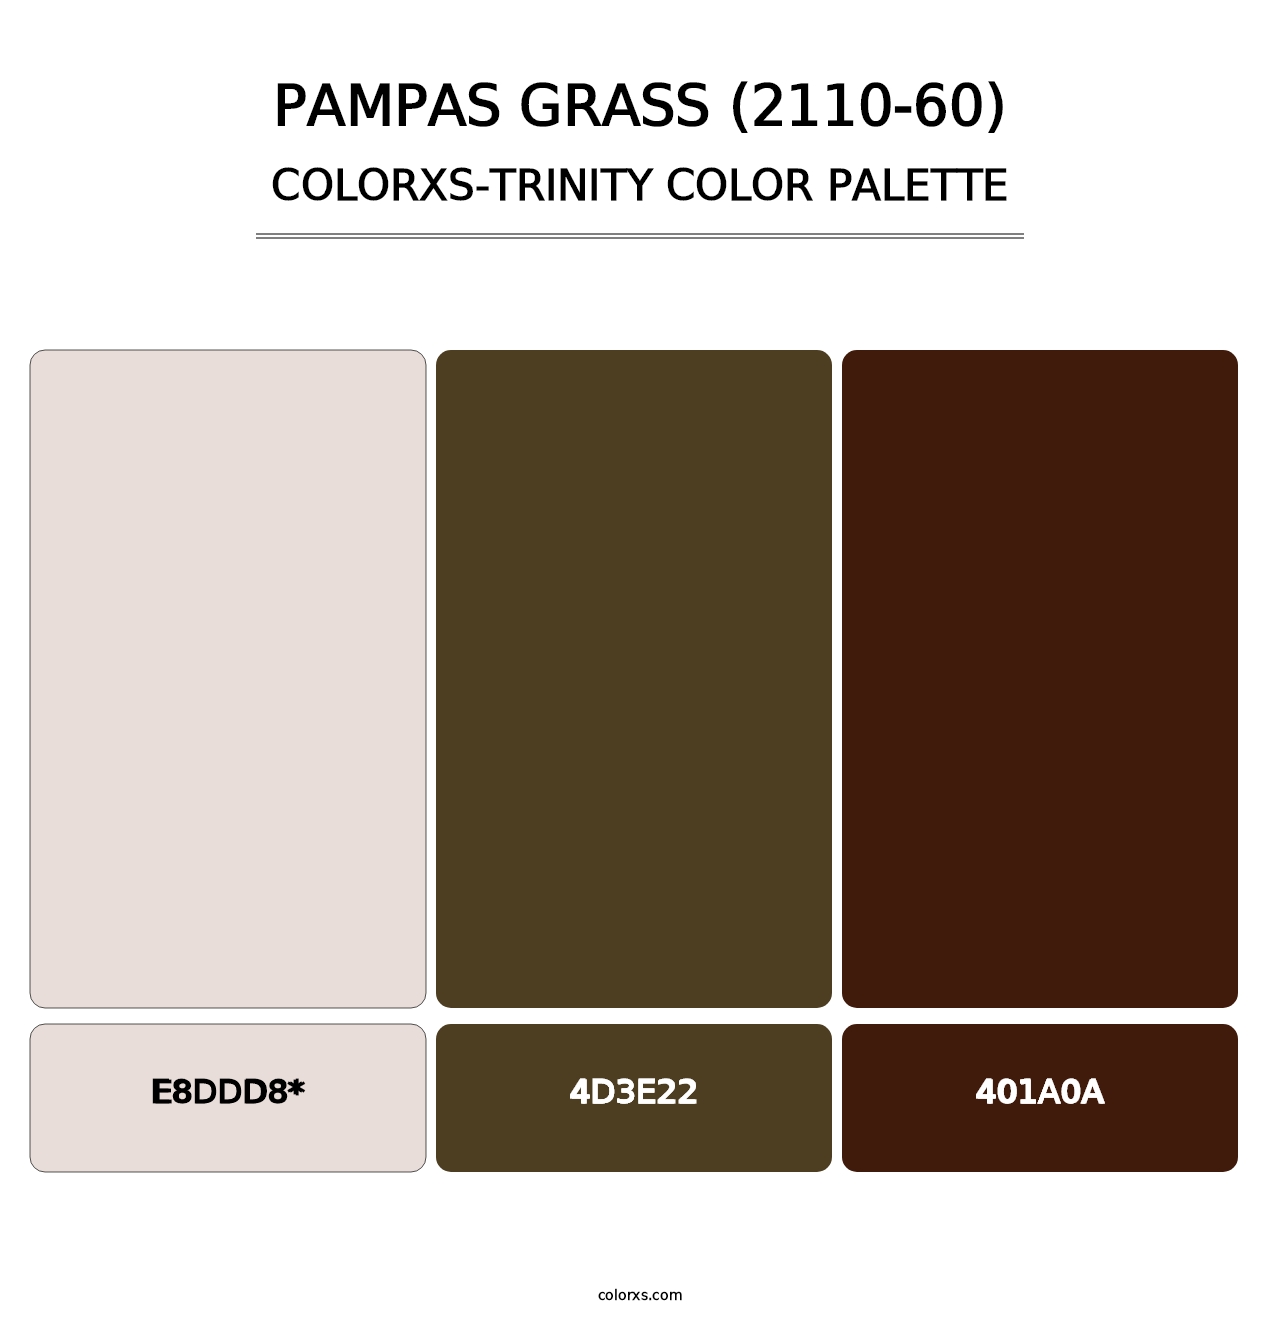 Pampas Grass (2110-60) - Colorxs Trinity Palette